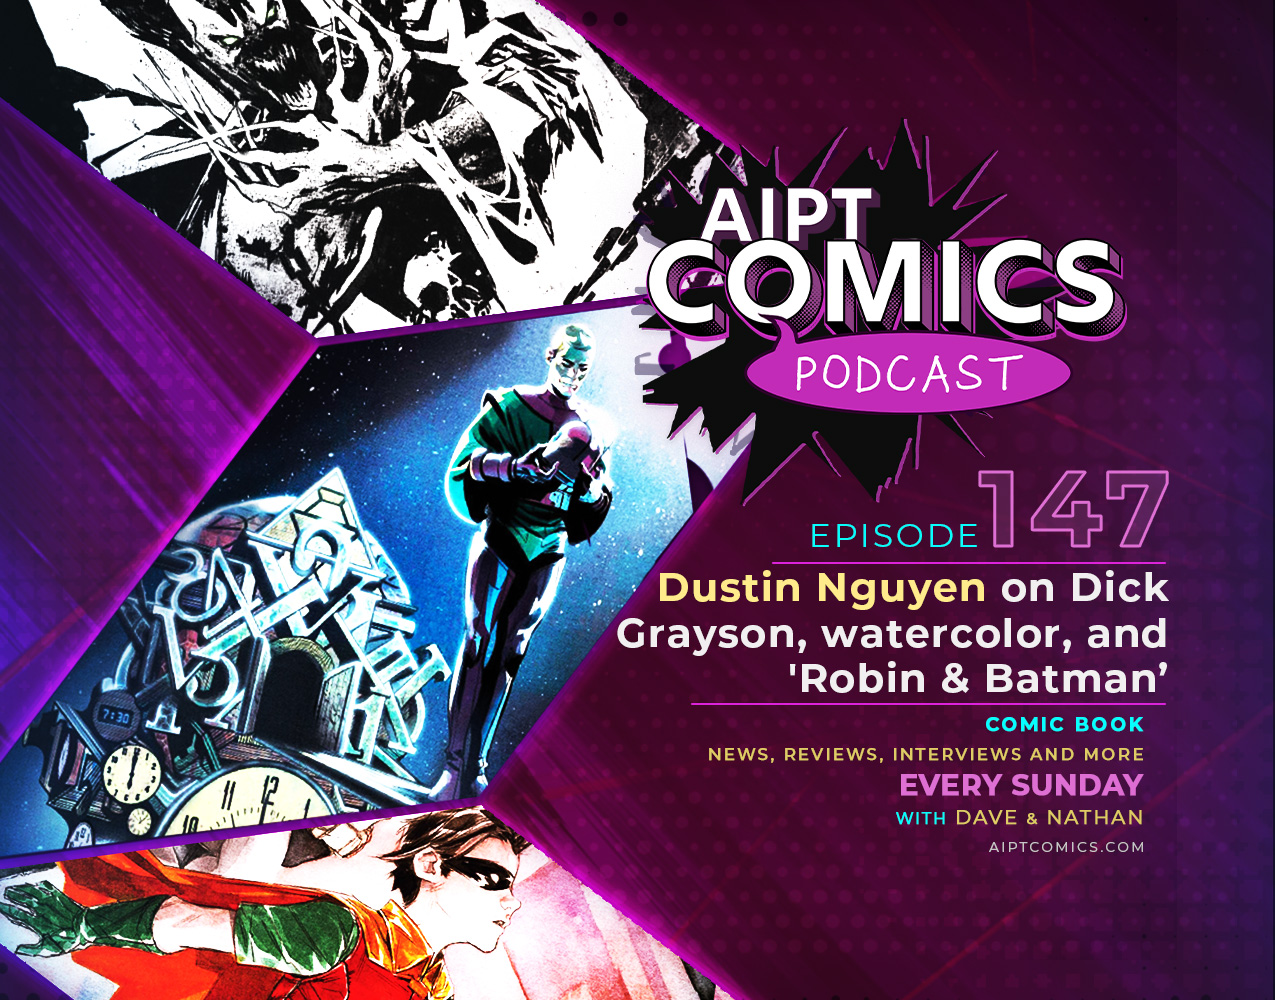 AIPT Comics Podcast episode 147: Dustin Nguyen on Dick Grayson, watercolor, and 'Robin & Batman'